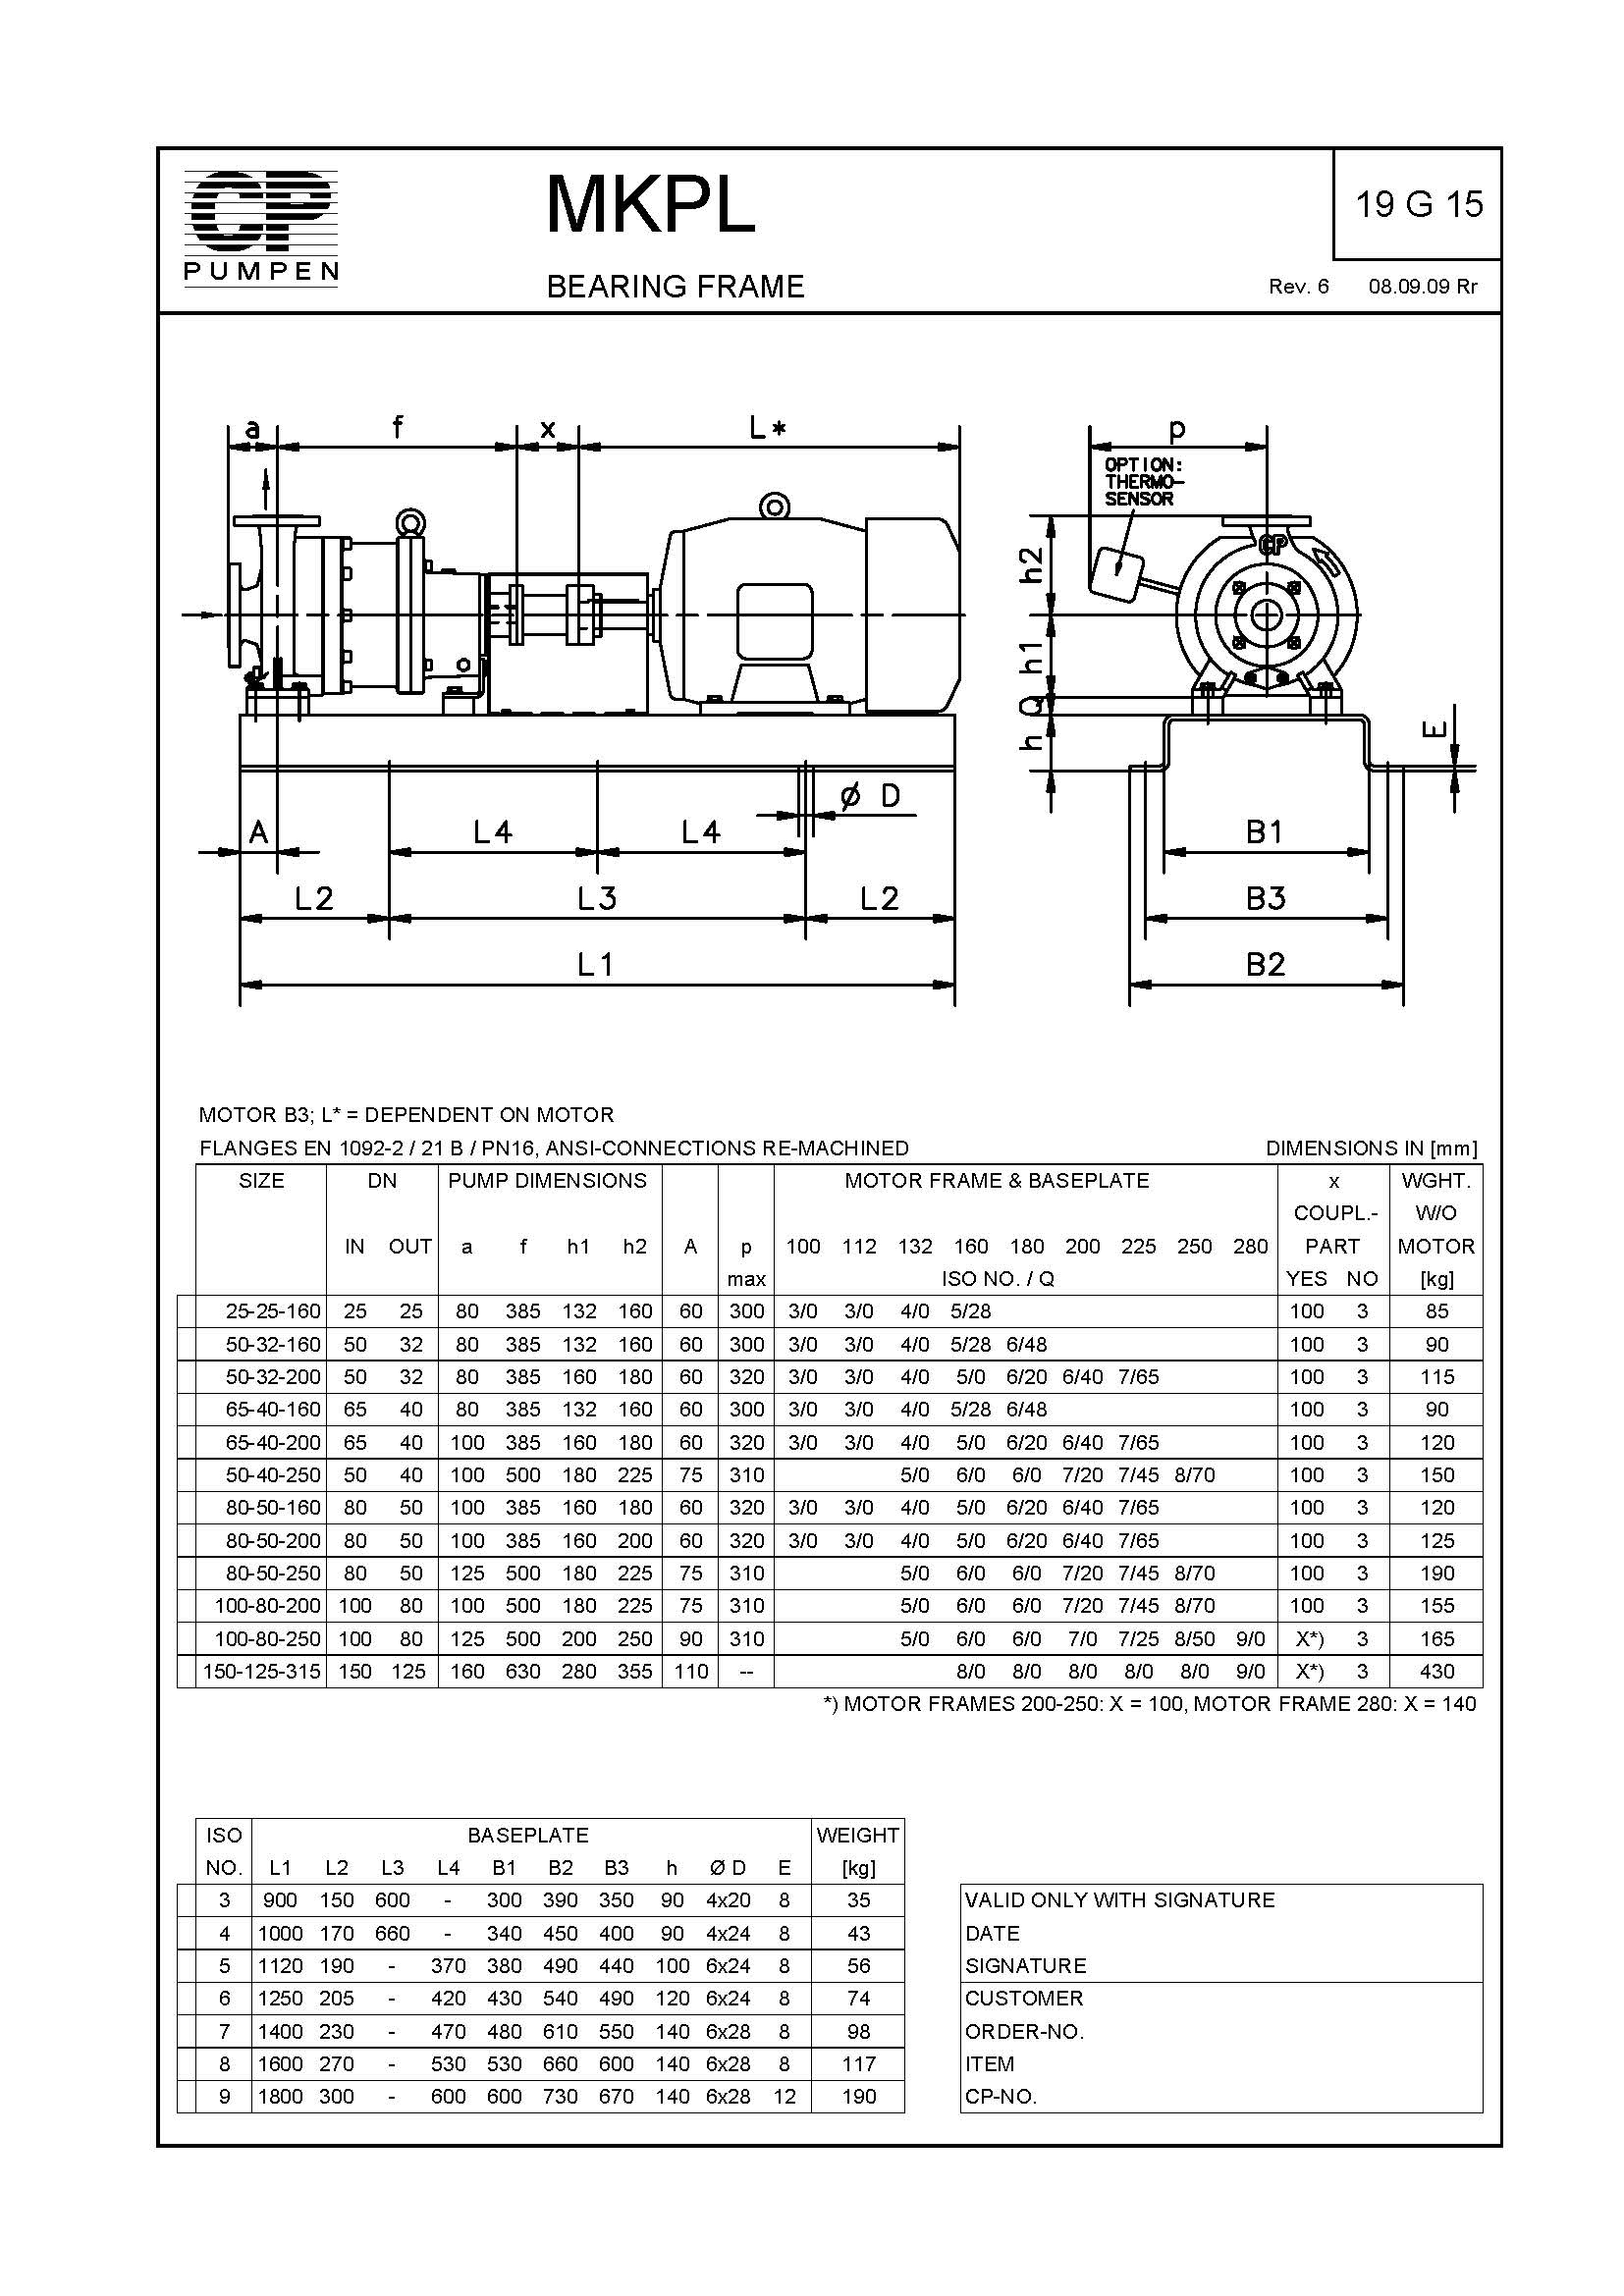 DimensionalDrawing MKPL BearingPedestal Baseplate Motor 19G15 Rev06